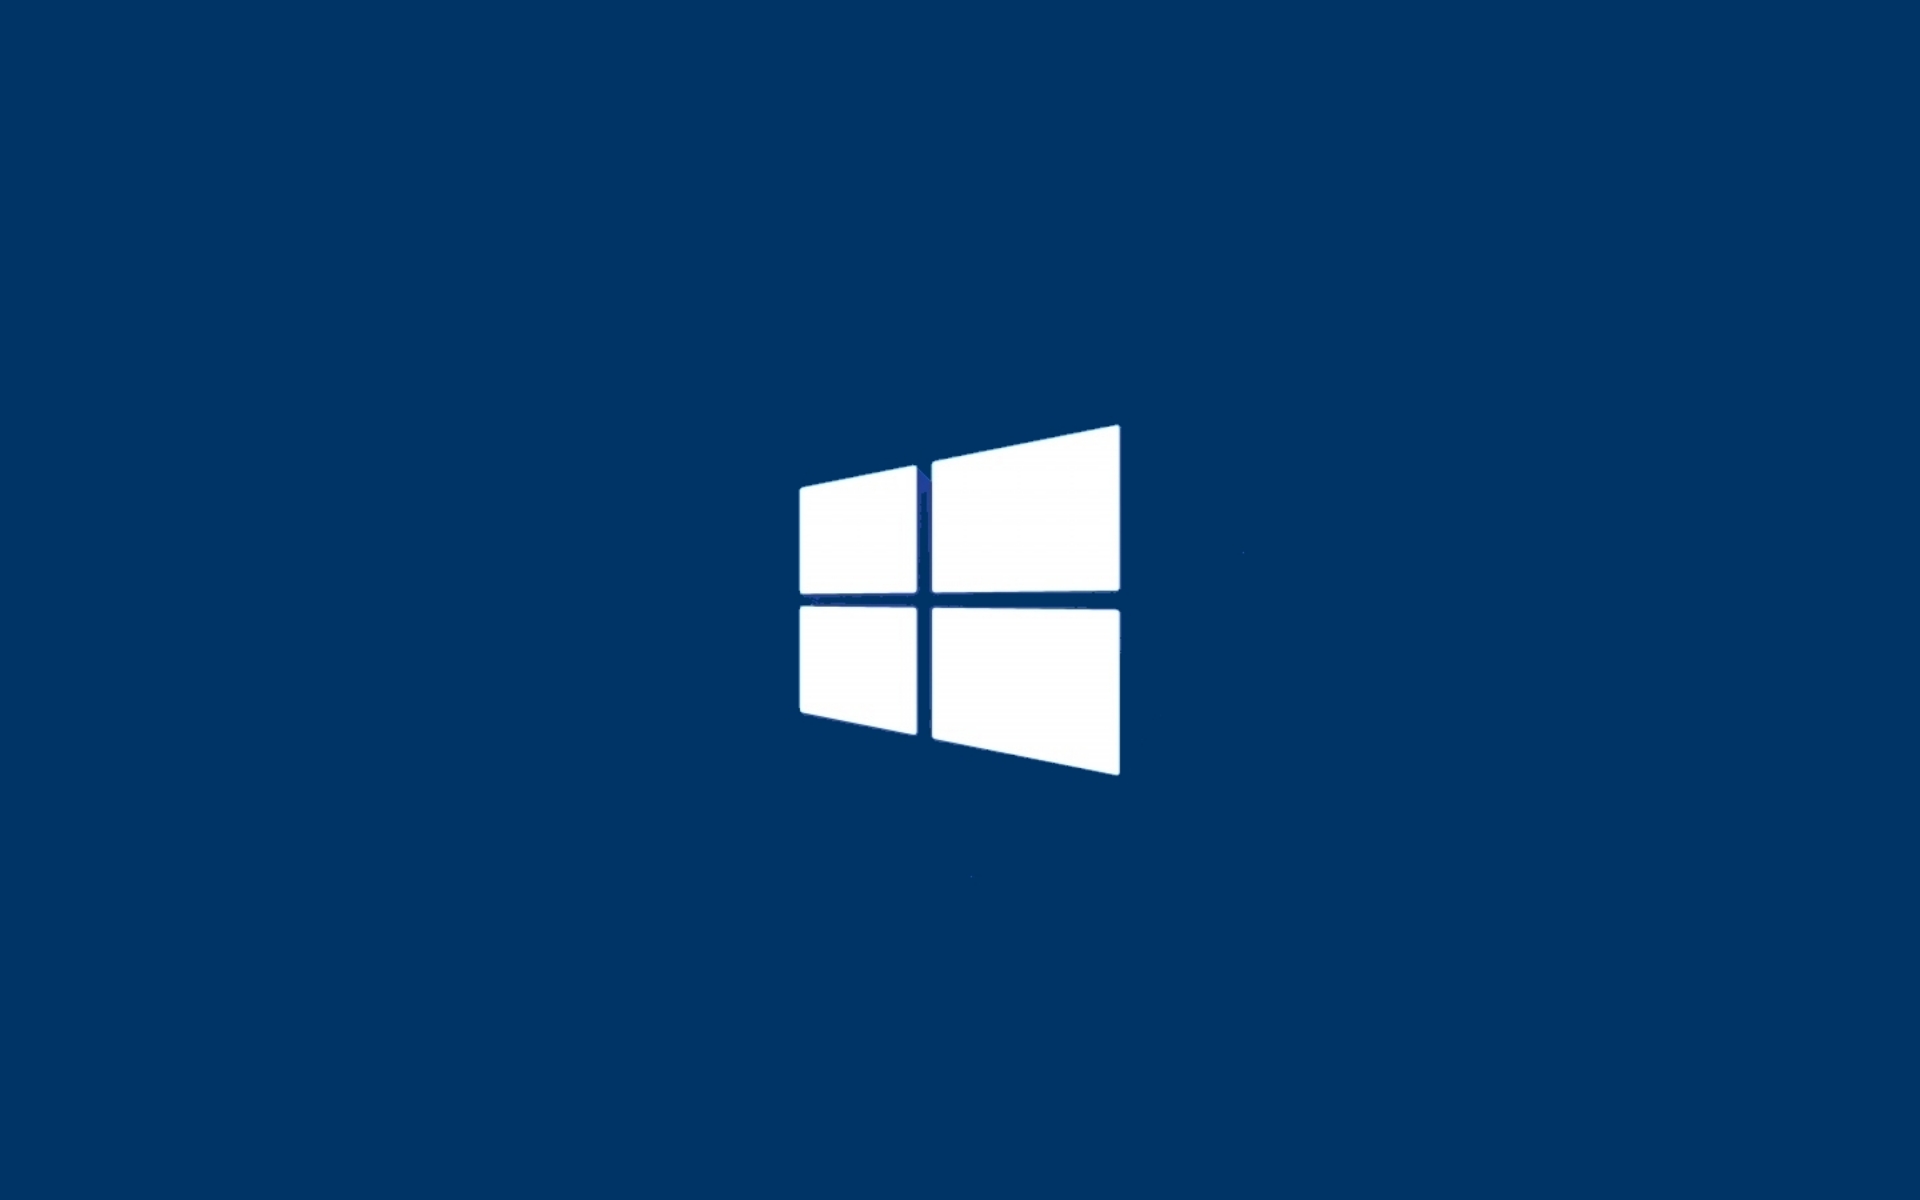 Windows-10-Wallpapers-1920x1200.jpg